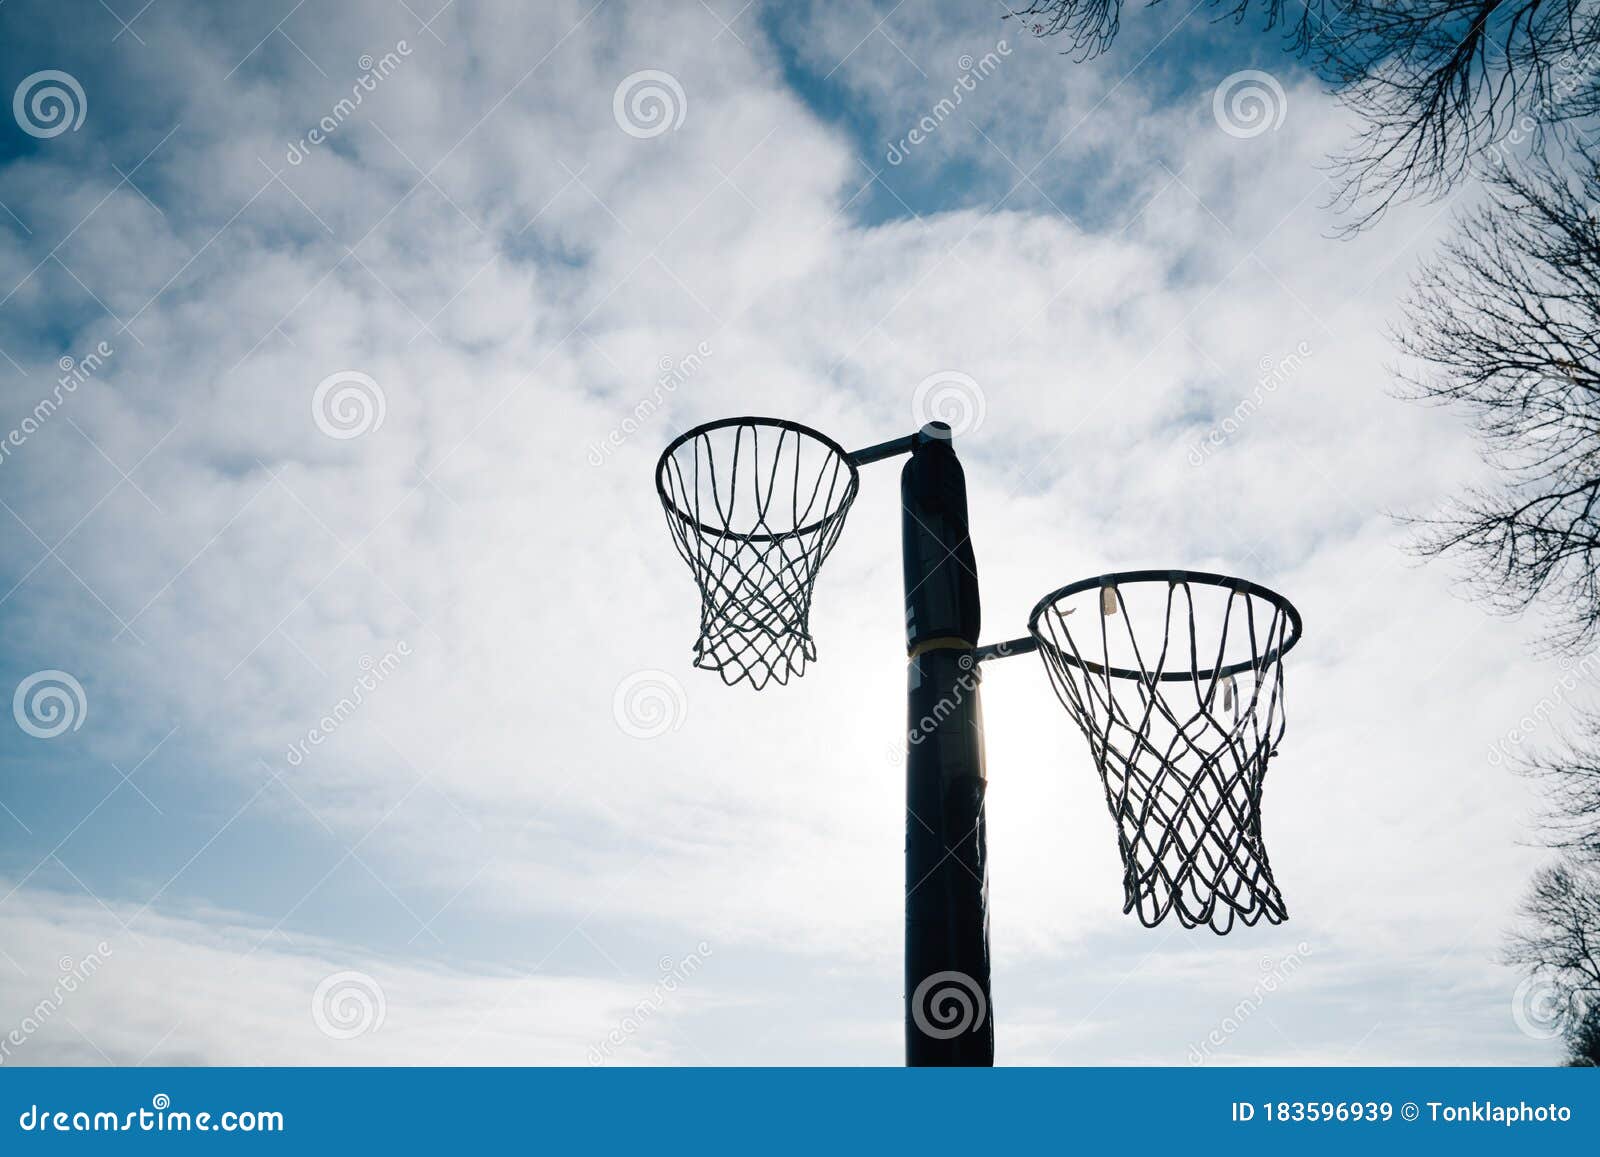 netball goal ring net against blue sky clouds hagley park christchurch new zealand 183596939